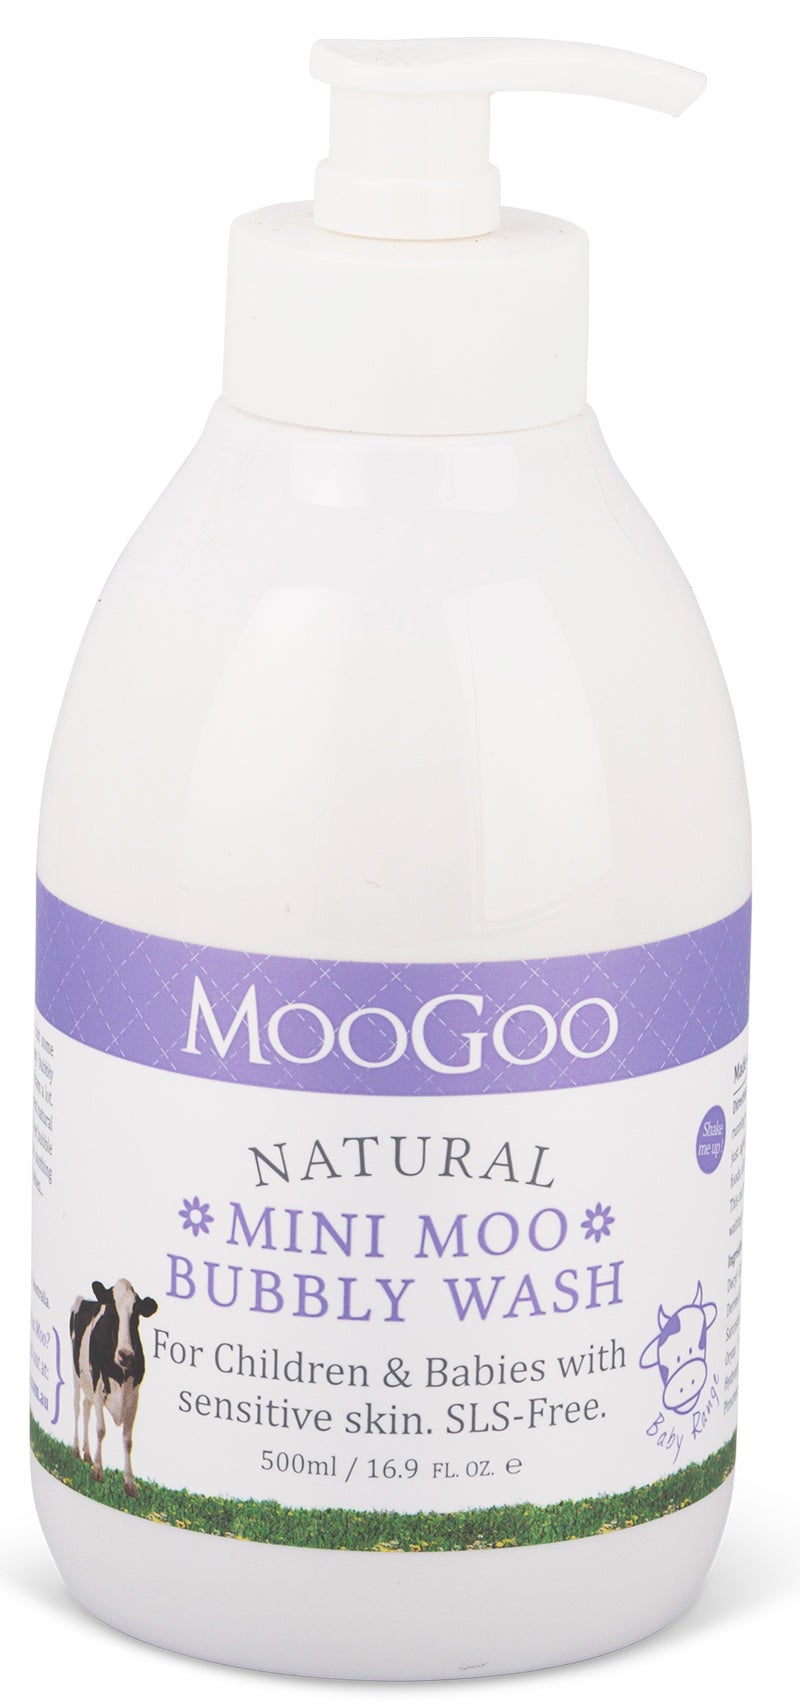 Moogoo Natural Mini Moo Bubbly Wash 500ml